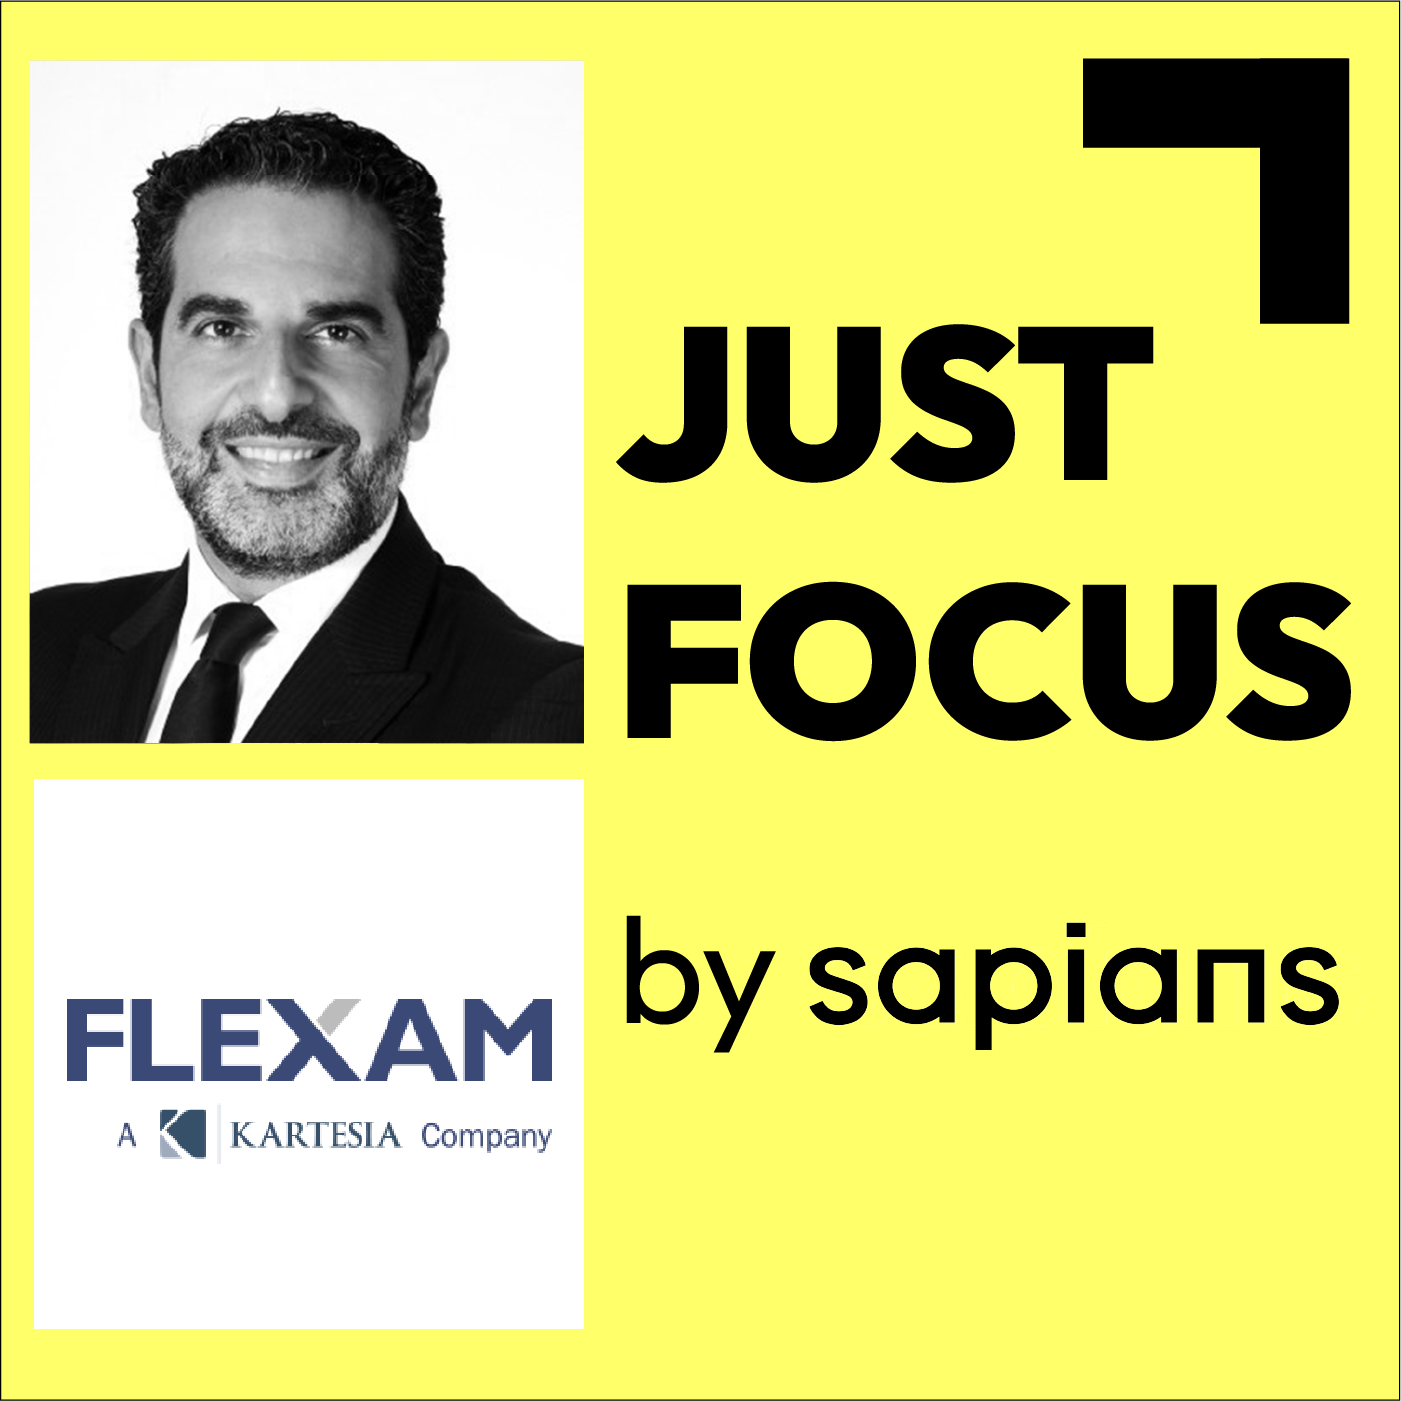 flexam-invest-olivier-fitoussi-podcast-just-focus-sapians